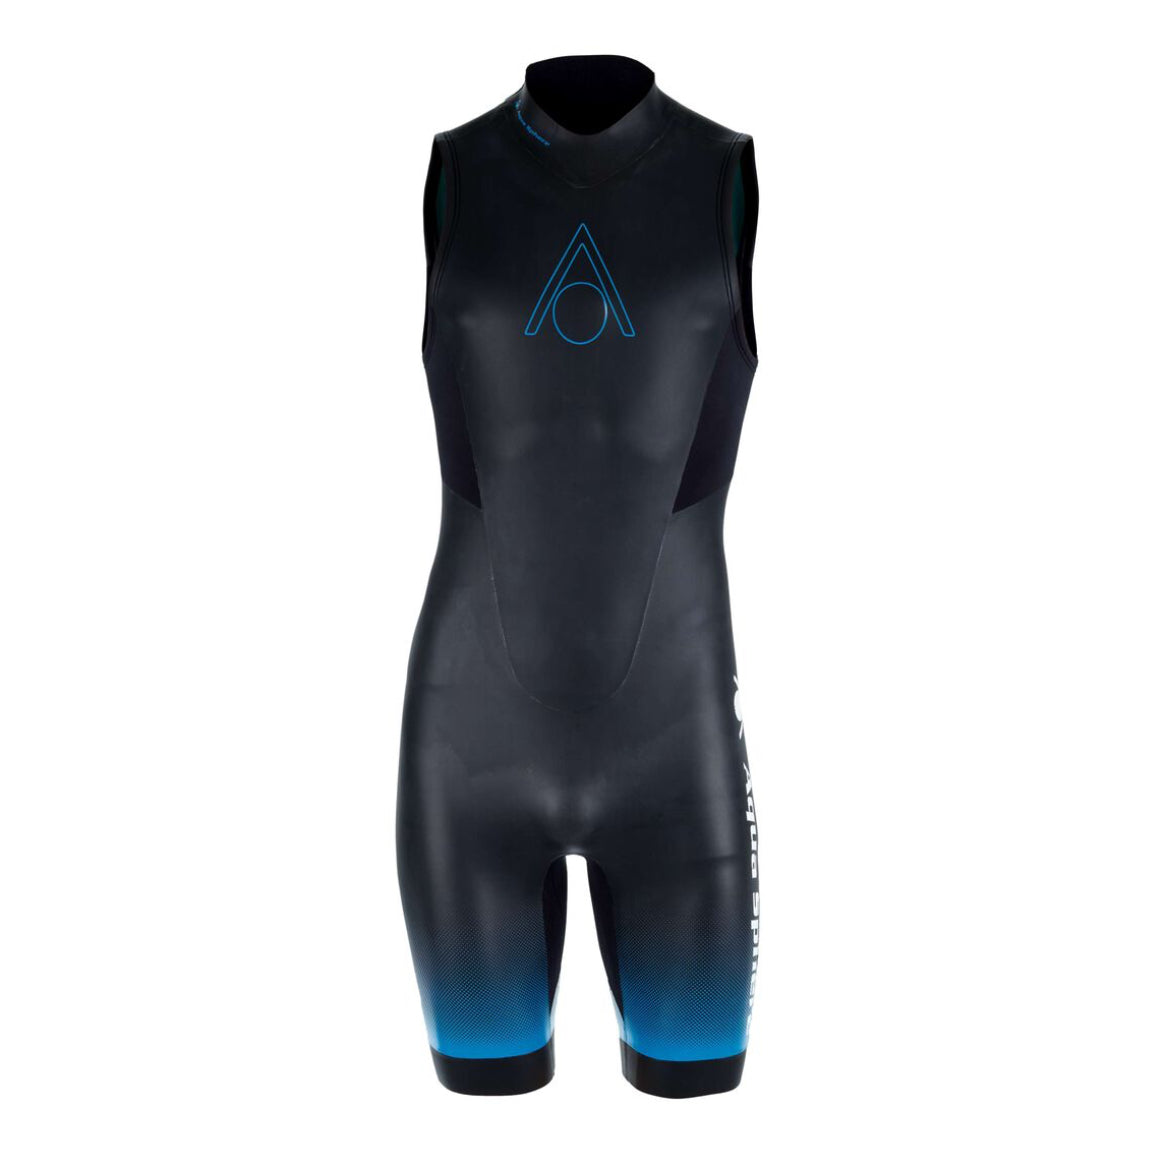 Aquasphere Aquaskin Shorty V3 Men's Open Water Wetsuit